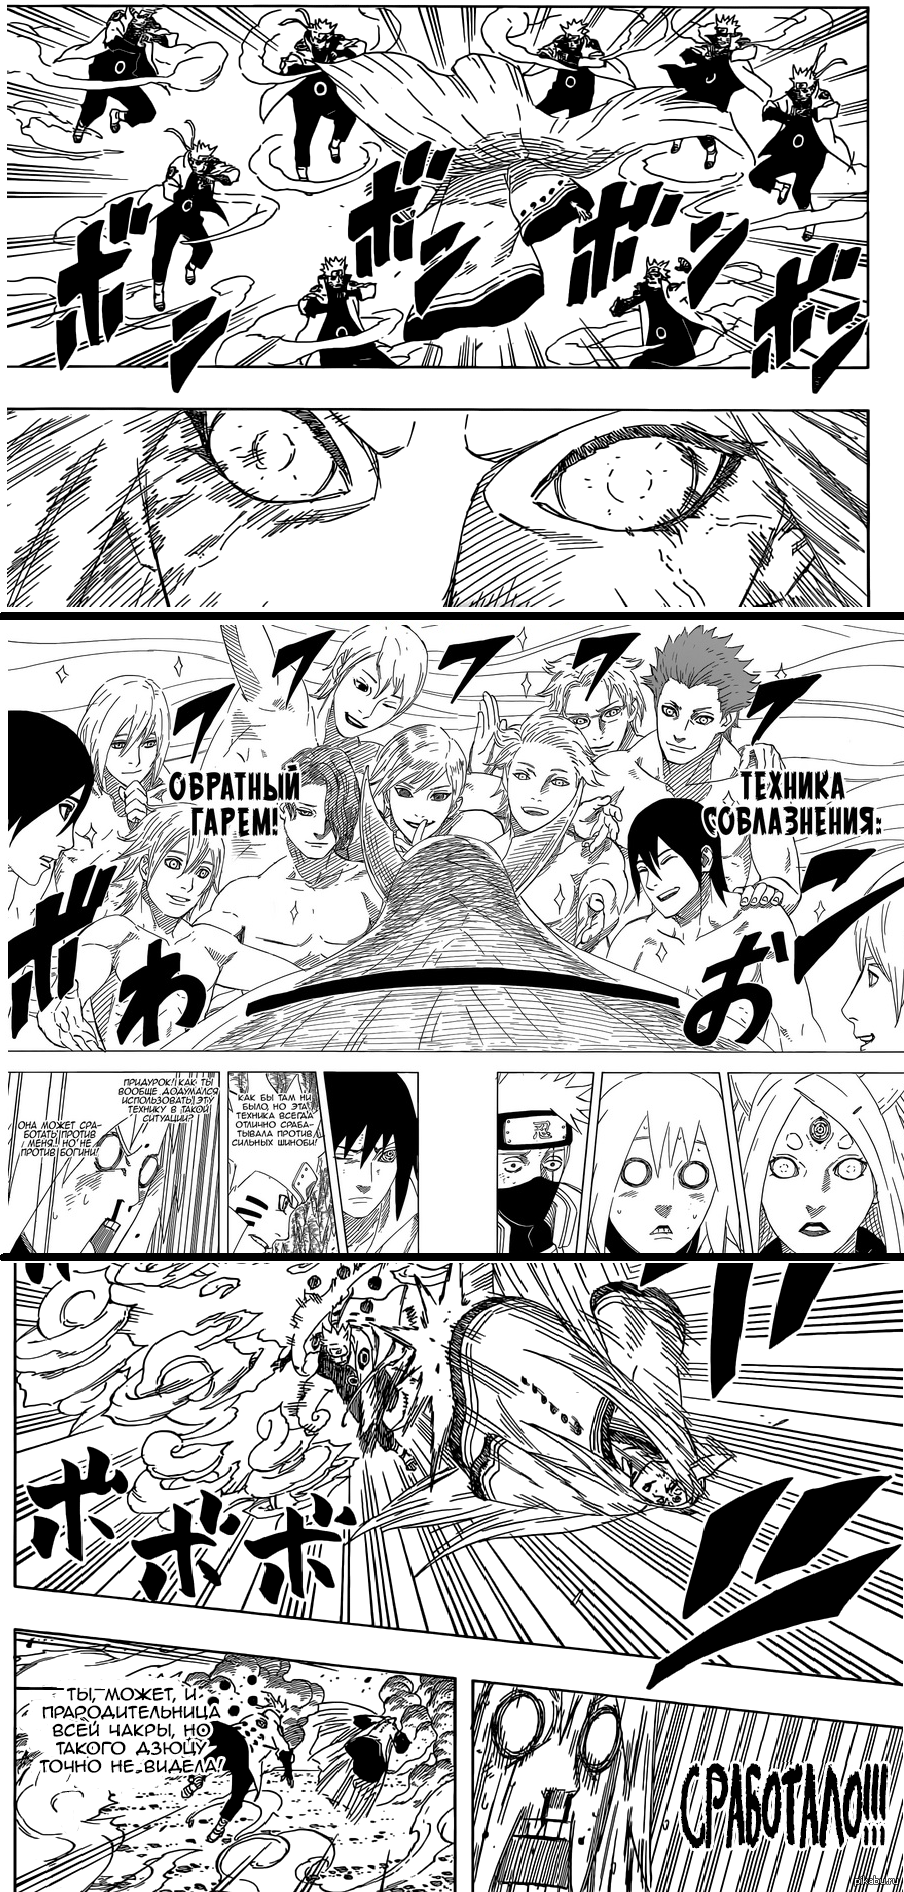 An unexpected moment in the Naruto manga. - Naruto, Anime, Manga, Spoiler